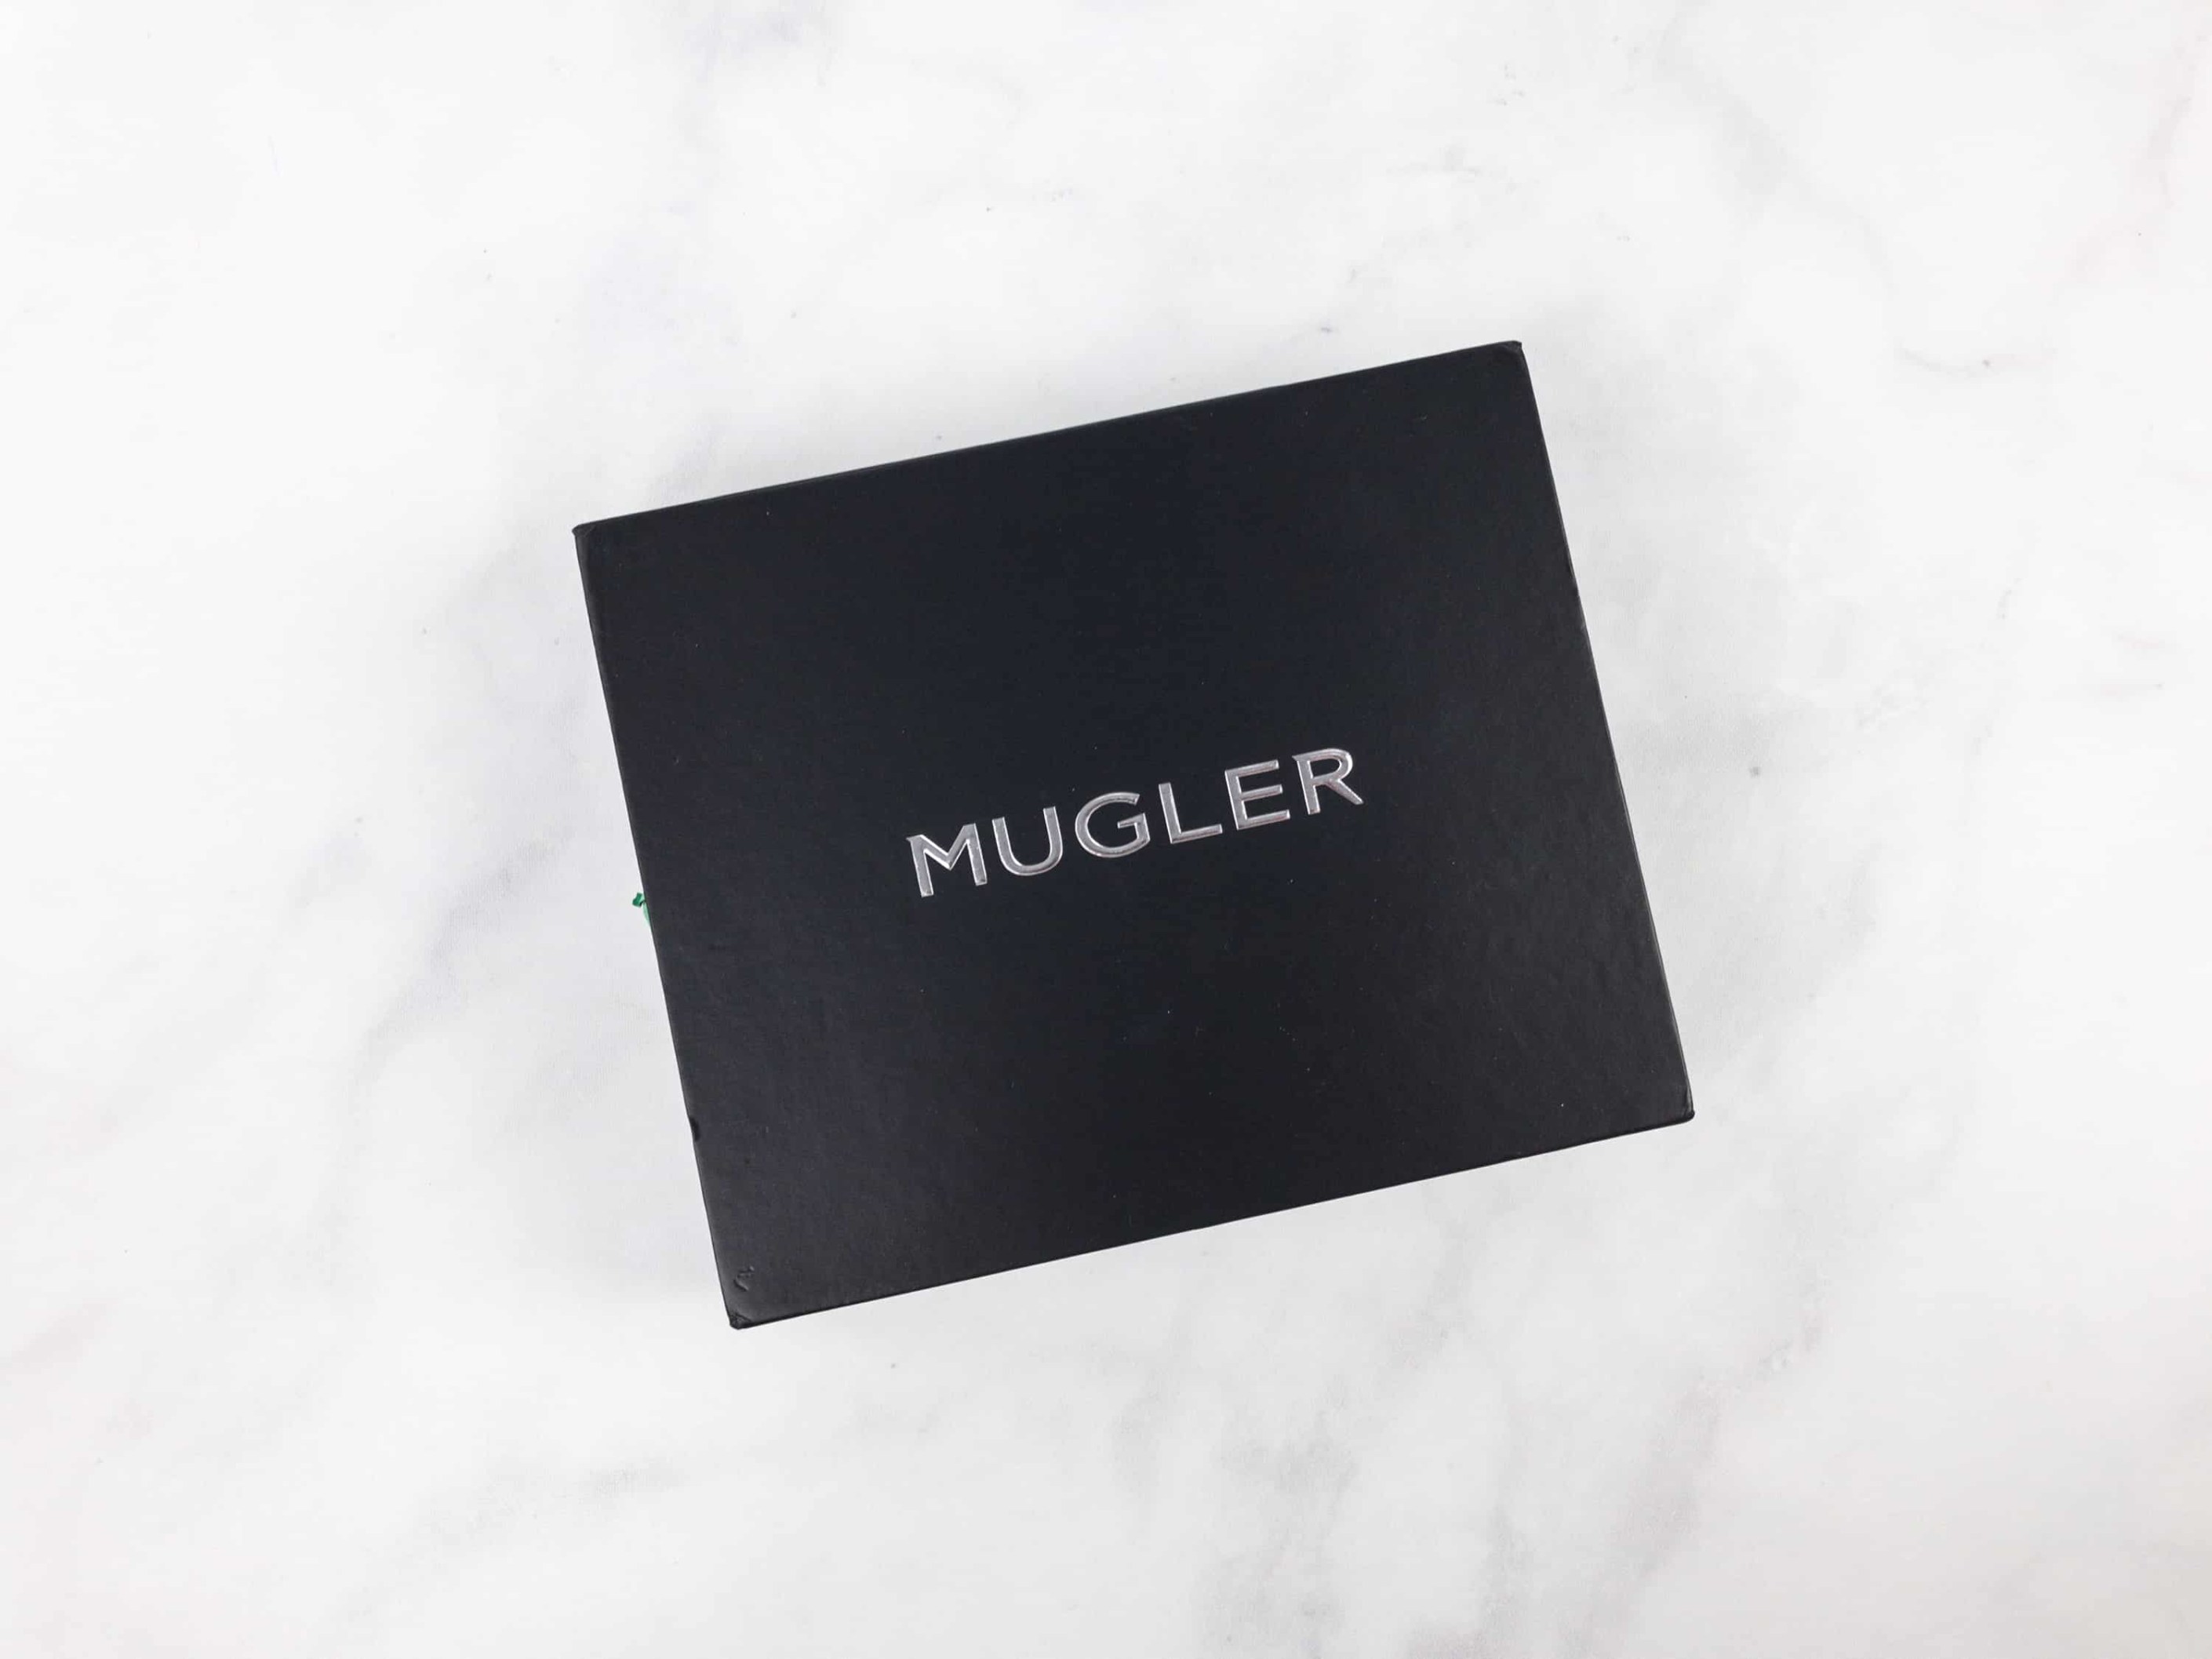 Mugler Addict Winter 2018 Subscription Box Review - Hello Subscription